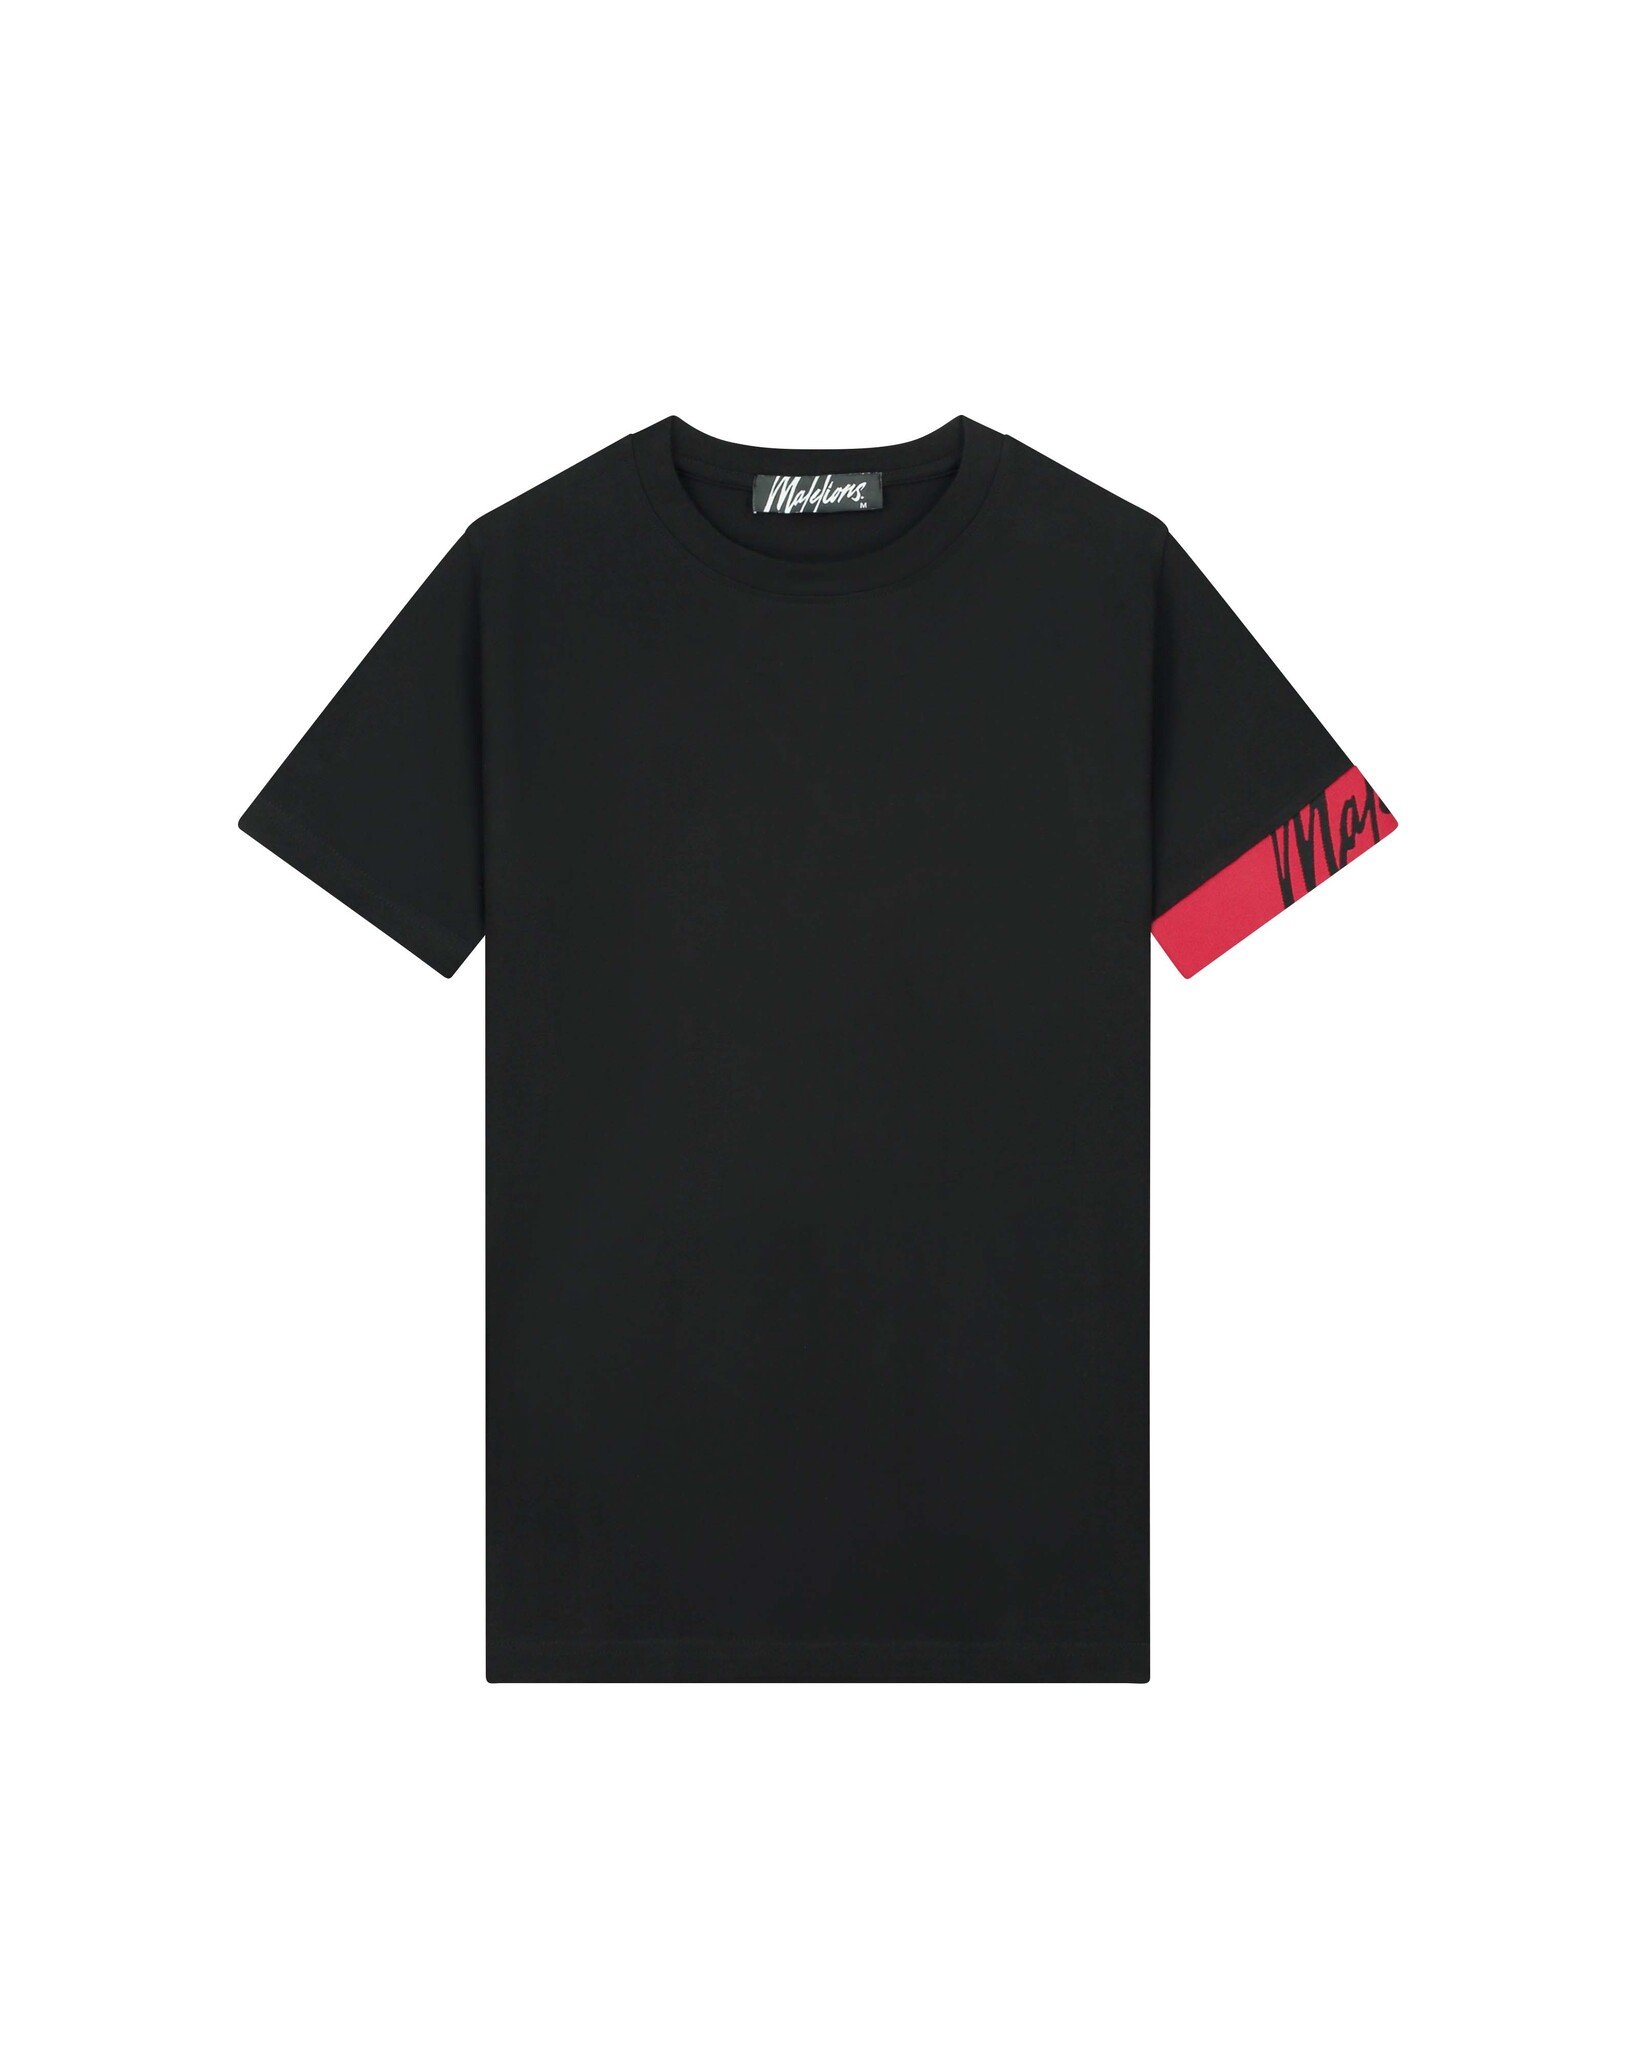 Malelions Men Captain T-Shirt 2.0 - Black/Red